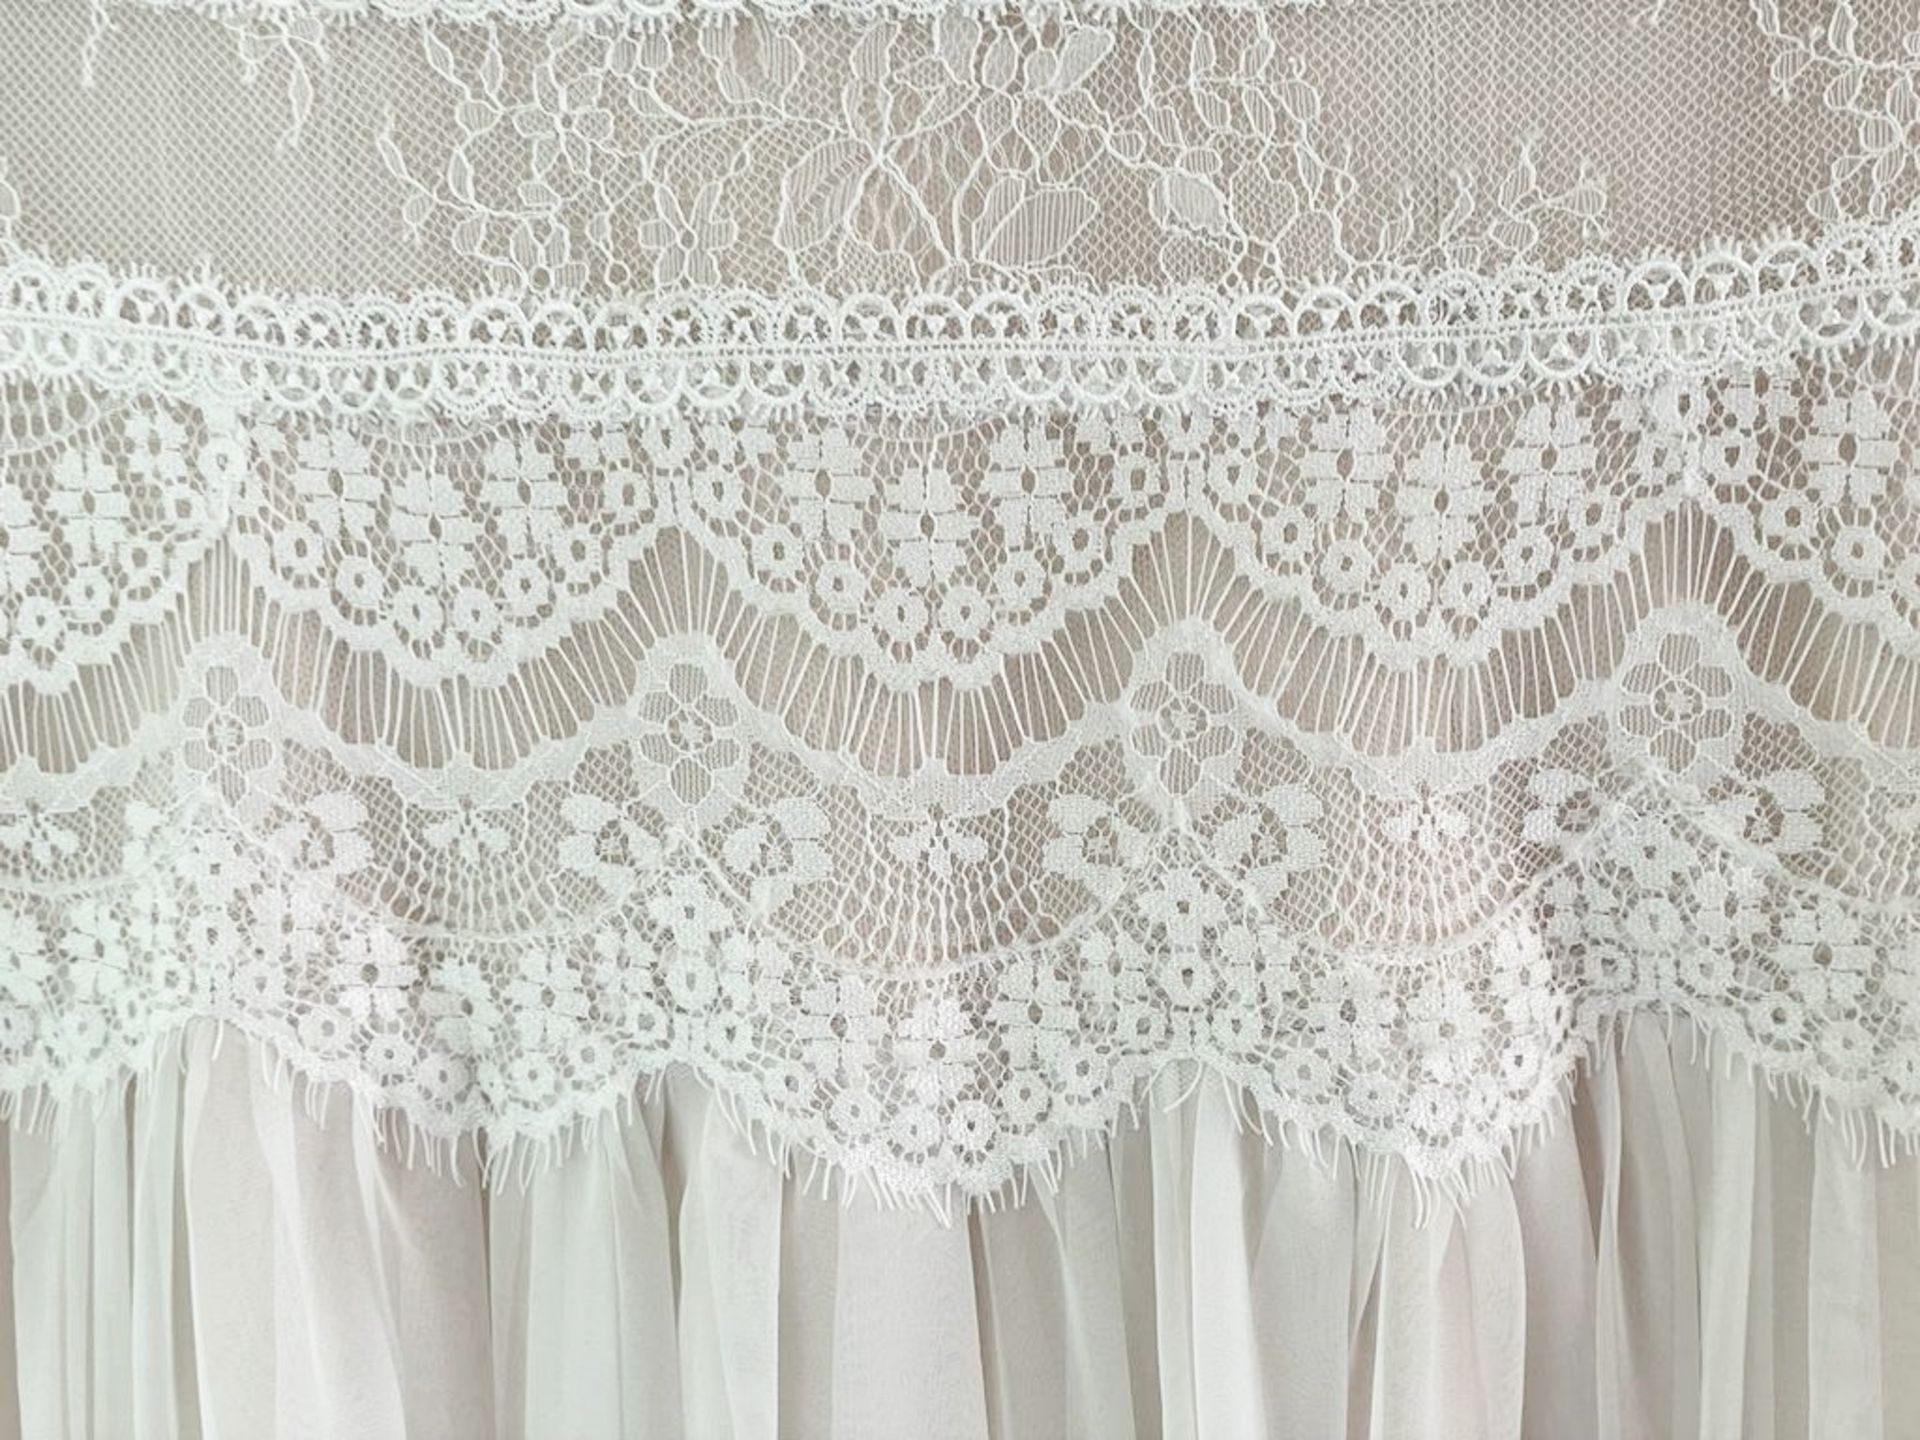 1 x MAGGIE SOTTERO 'Deirdre' Designer Wedding Dress Bridal Gown - Size: UK 10 - Original RRP £15,060 - Image 9 of 11